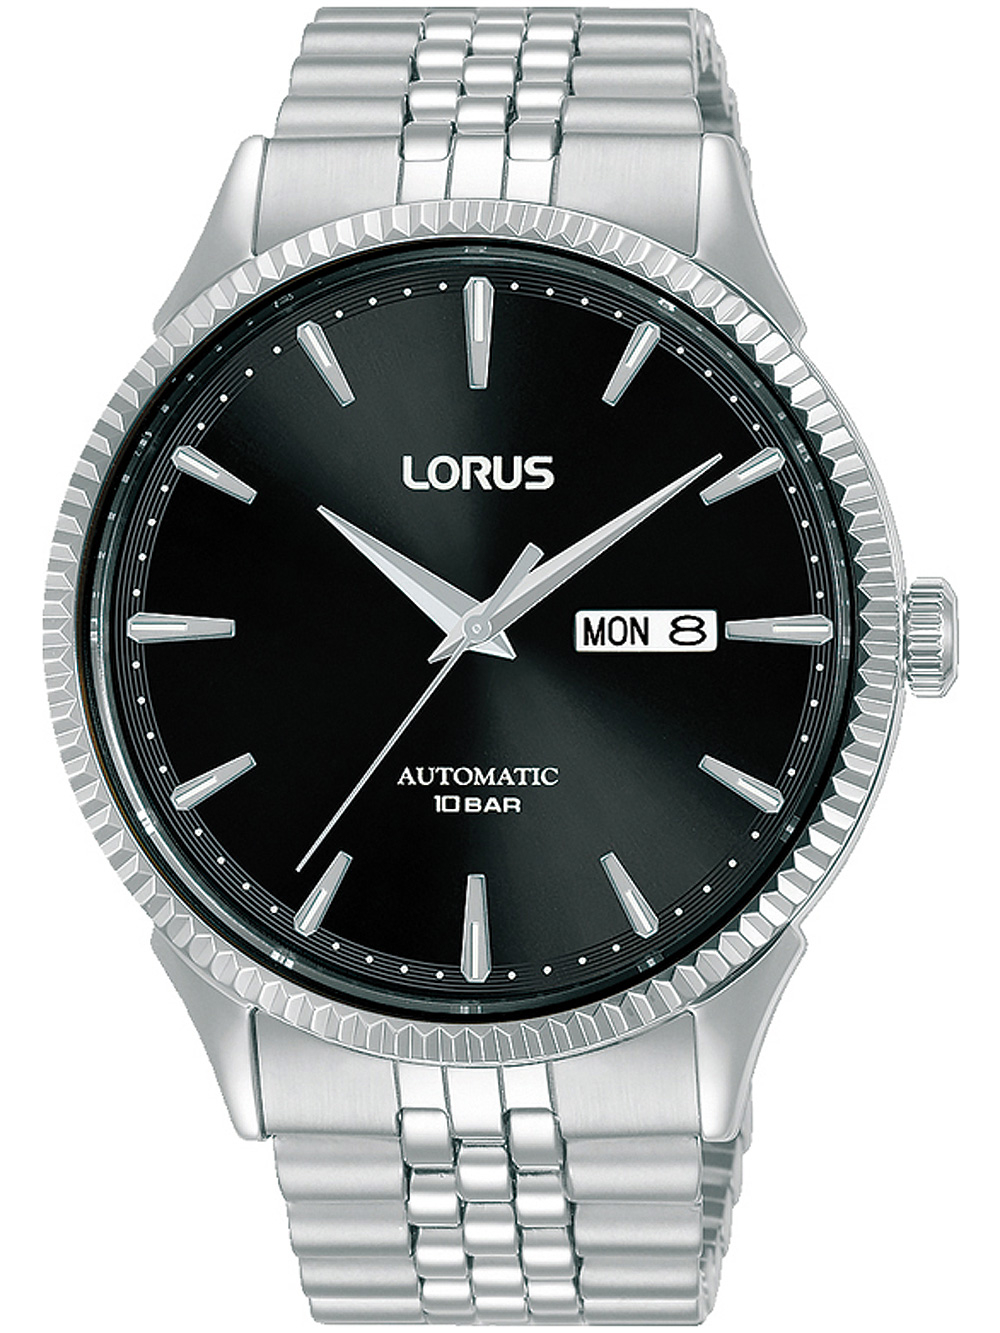 Lorus RL471AX9